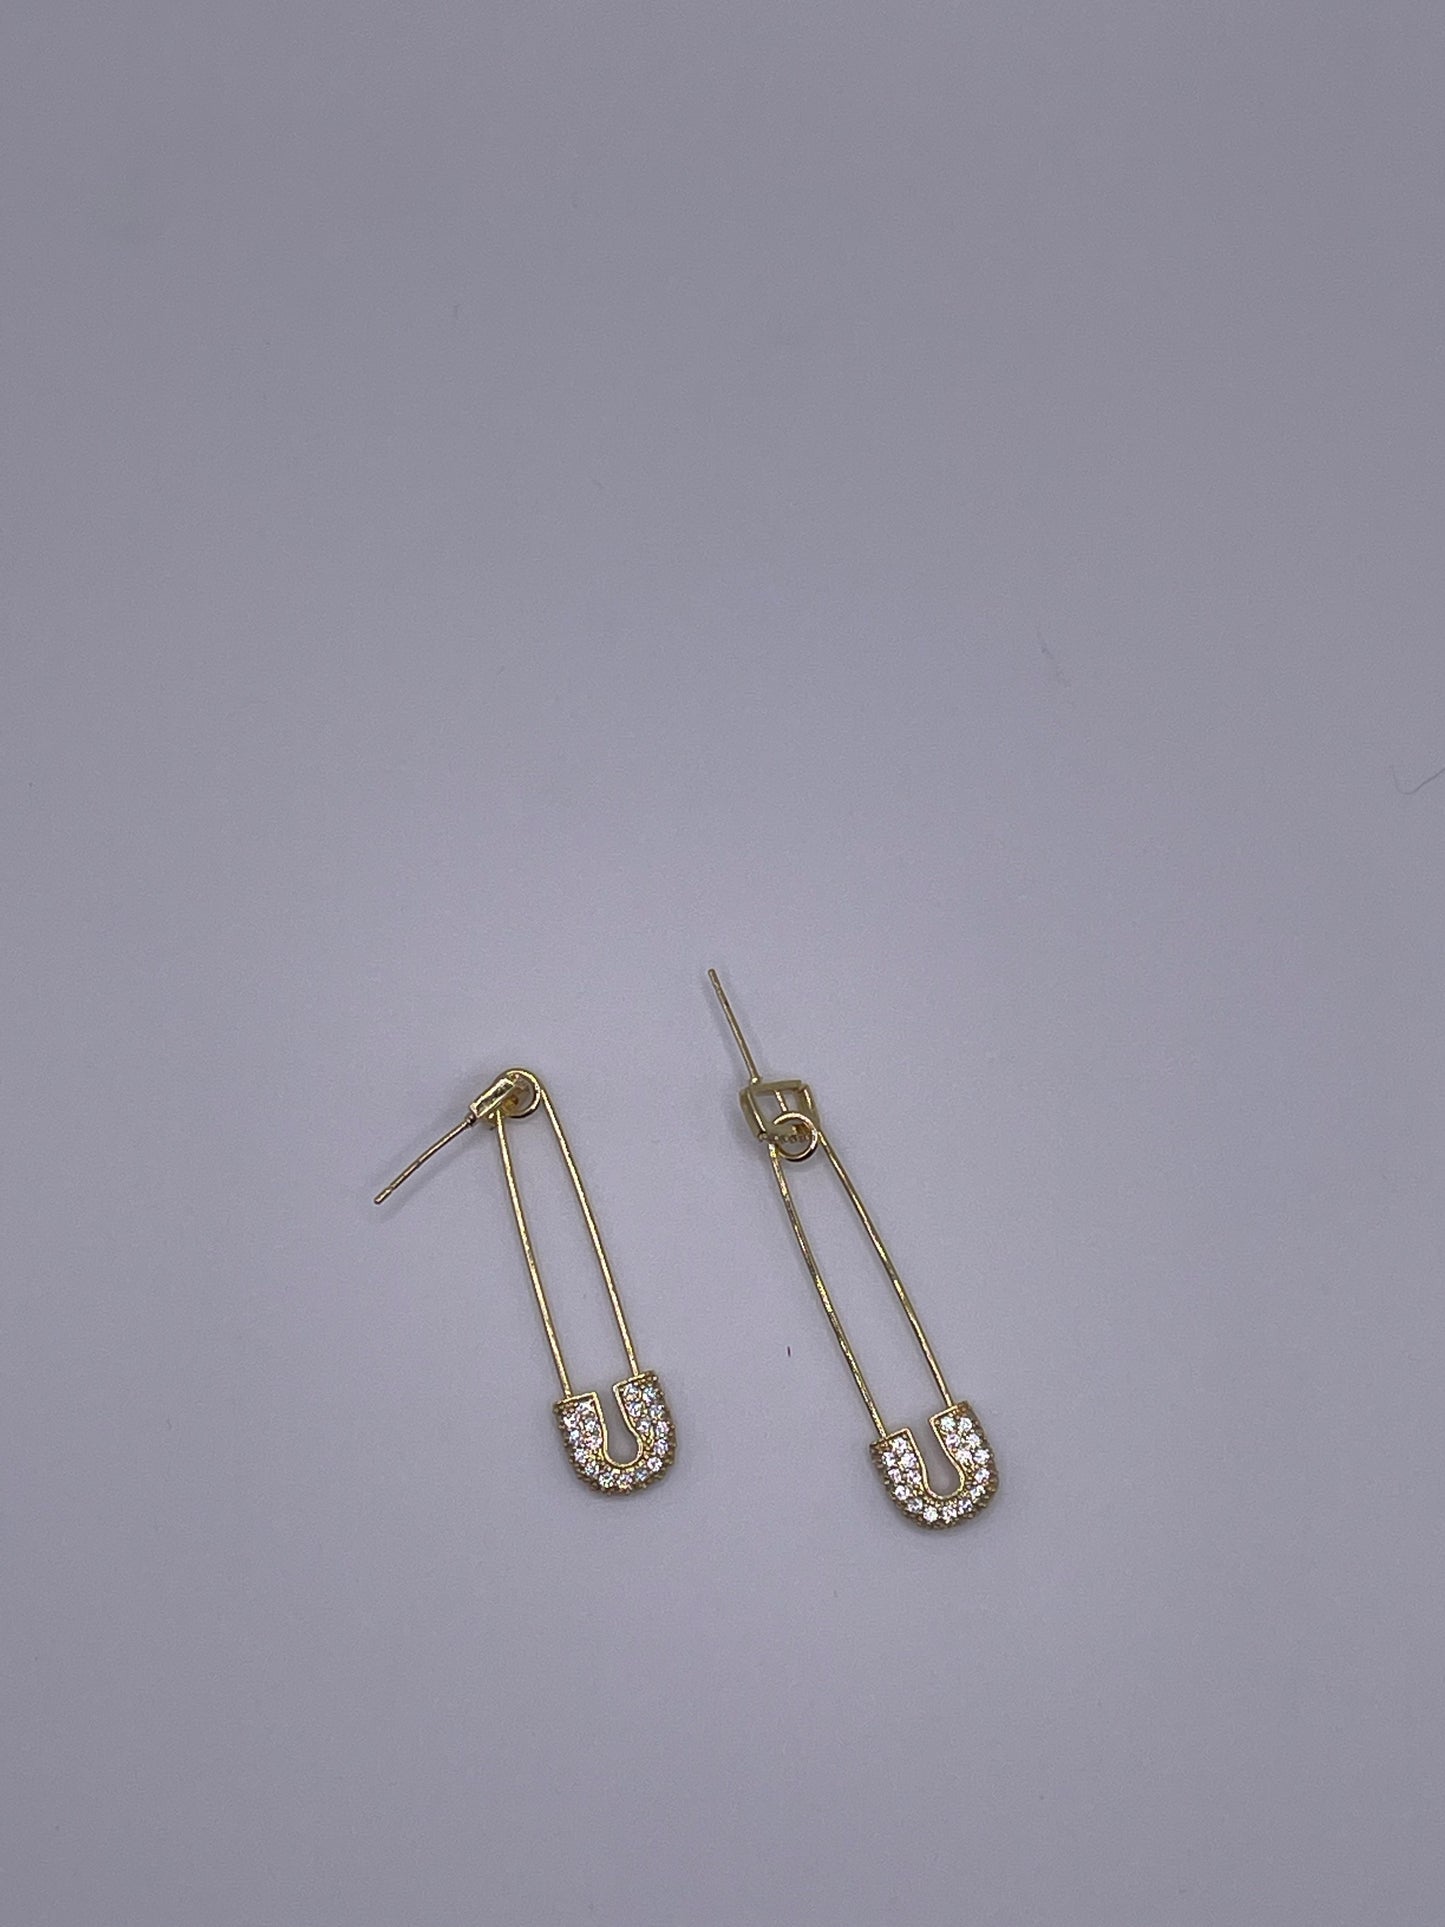 CZ Dangling Safety Pin Earrings